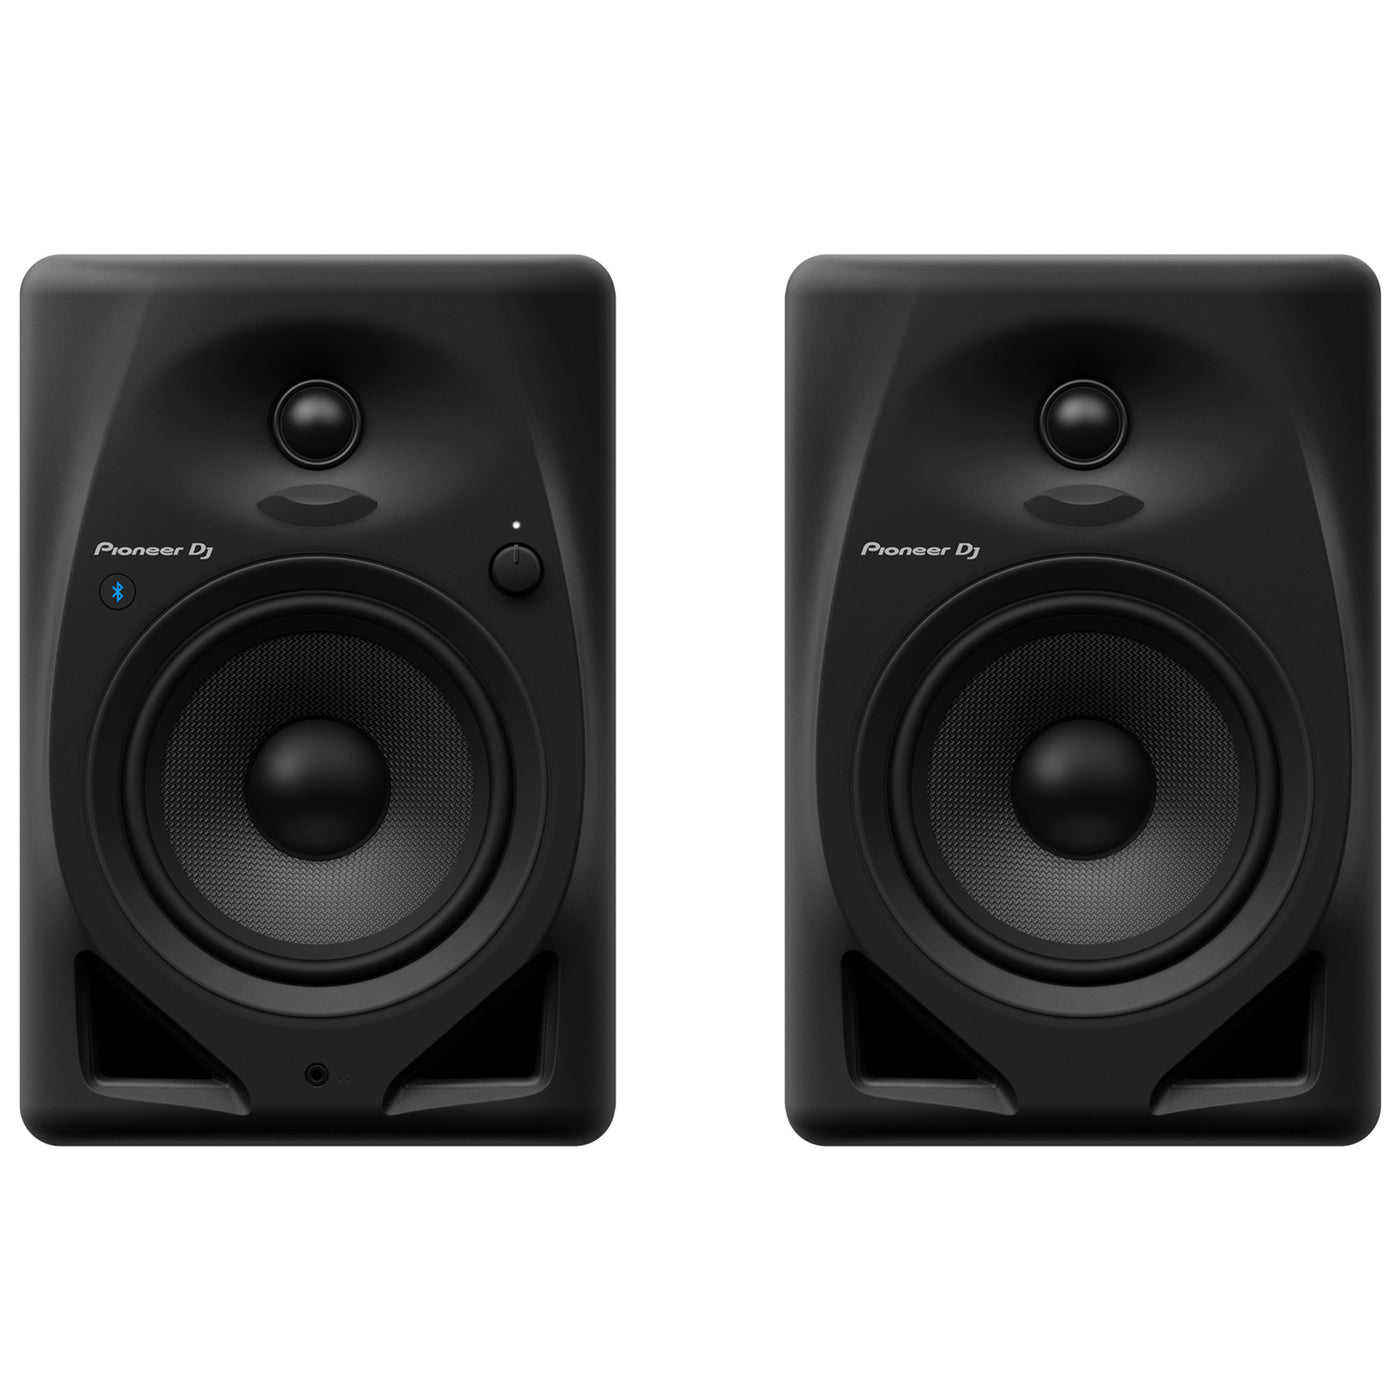 Pioneer DJ DM-50D-BT 5-Inch Desktop Studio Monitor System, Electronic Bluetooth Speakers, Professional Audio Equipment - Black